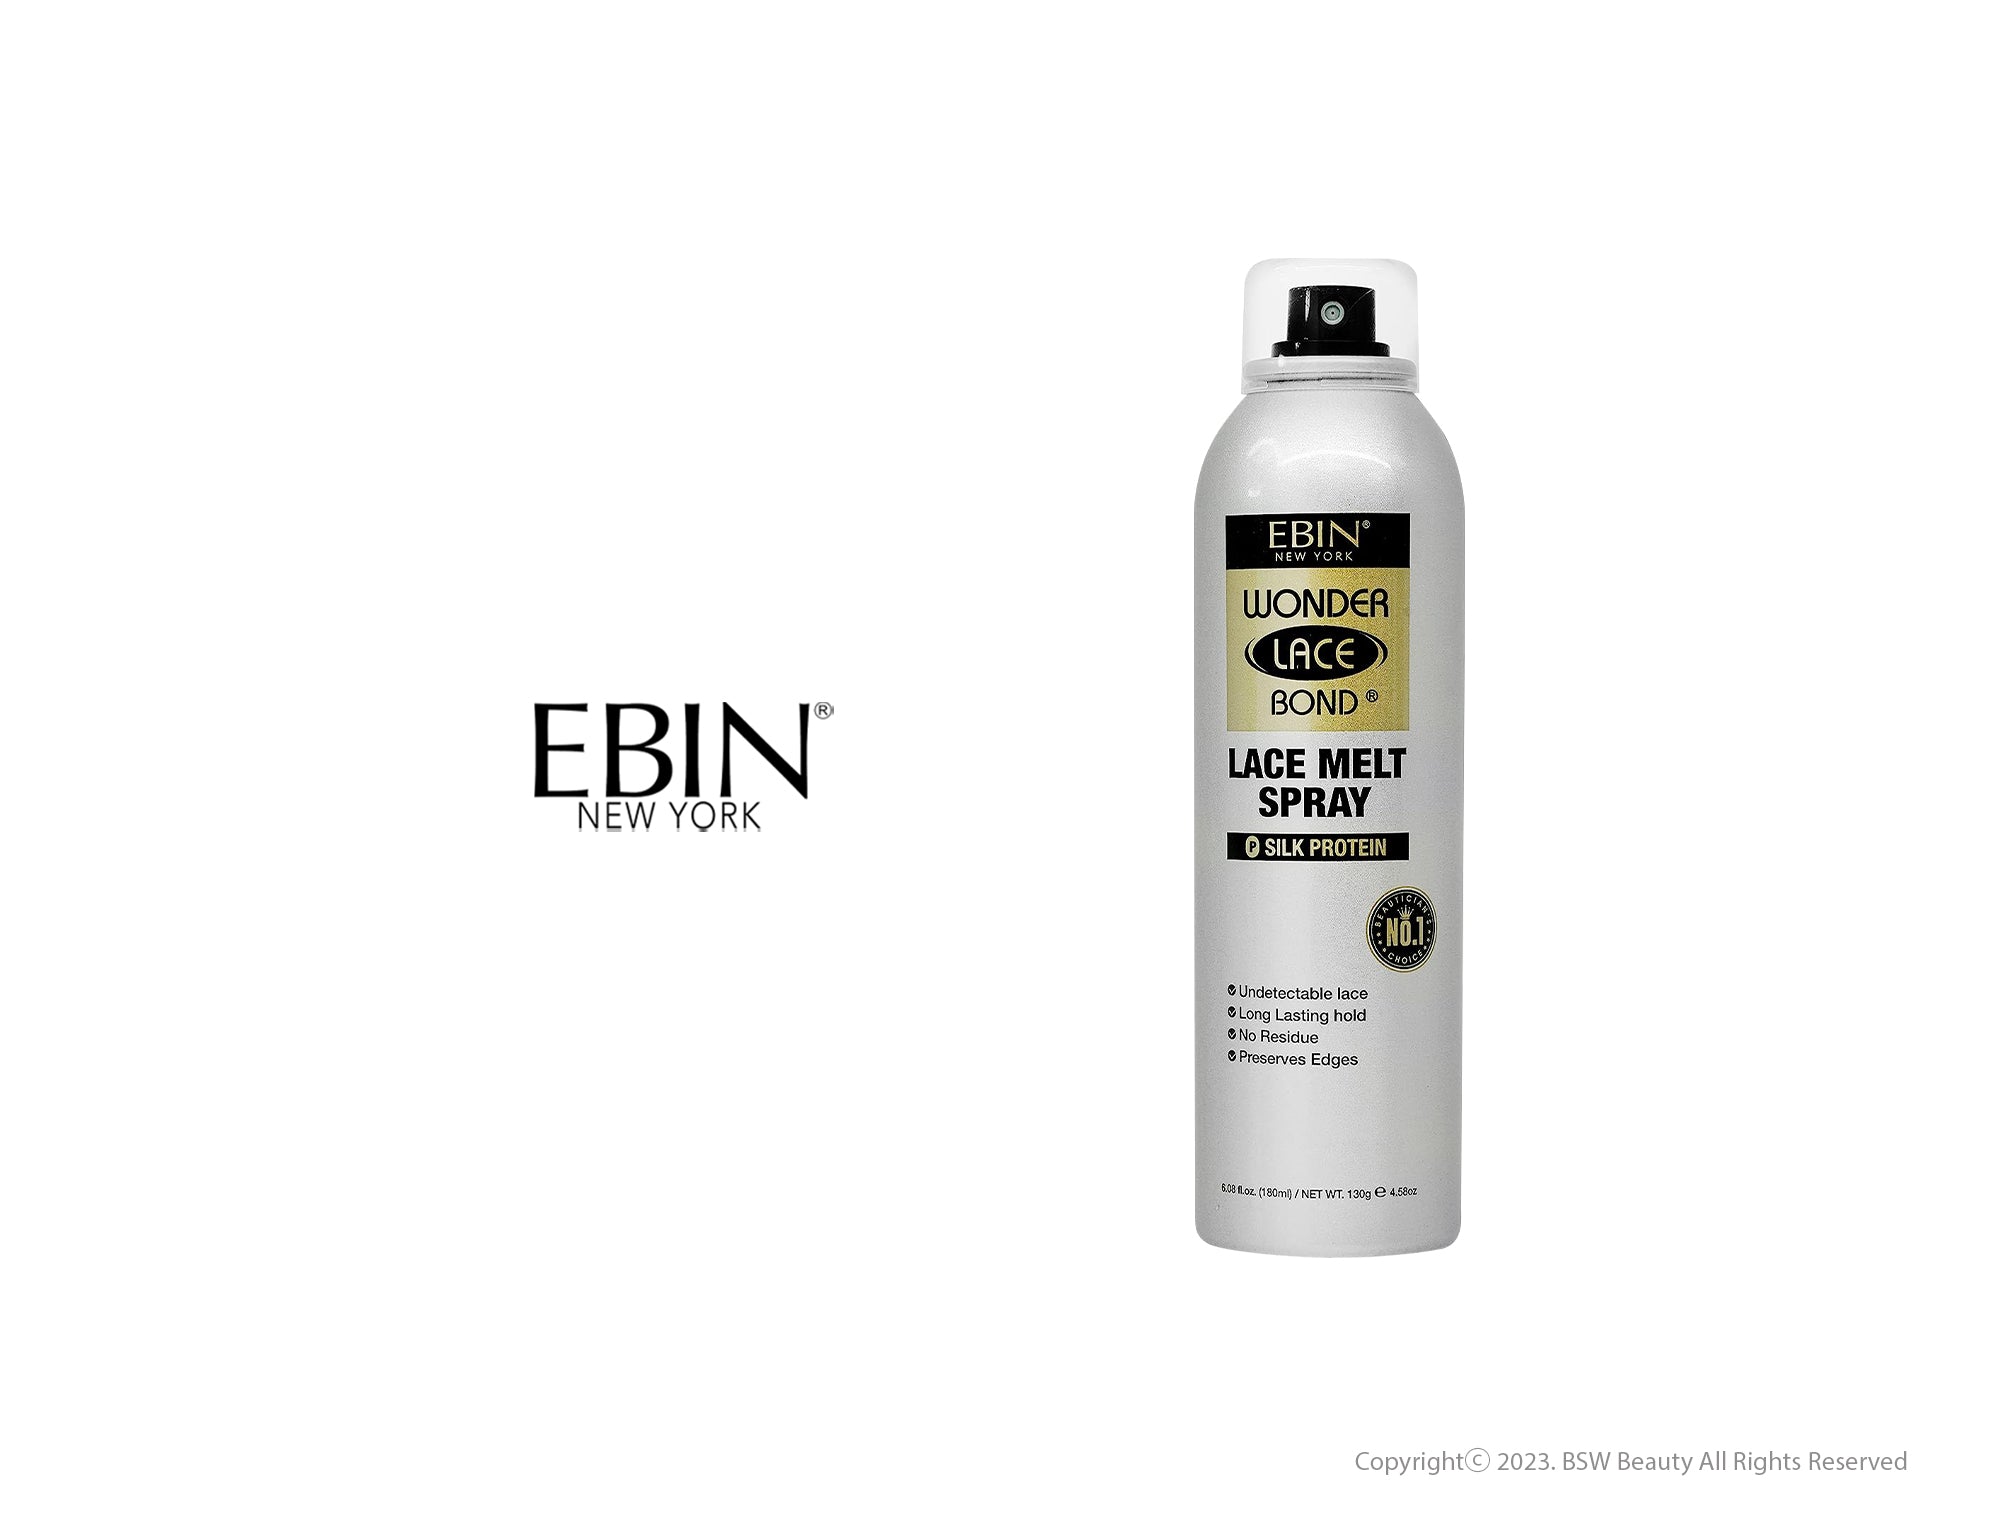 Ebin - Wonder Lace Bond Lace Melt Spray- Silk Protein 6.34oz